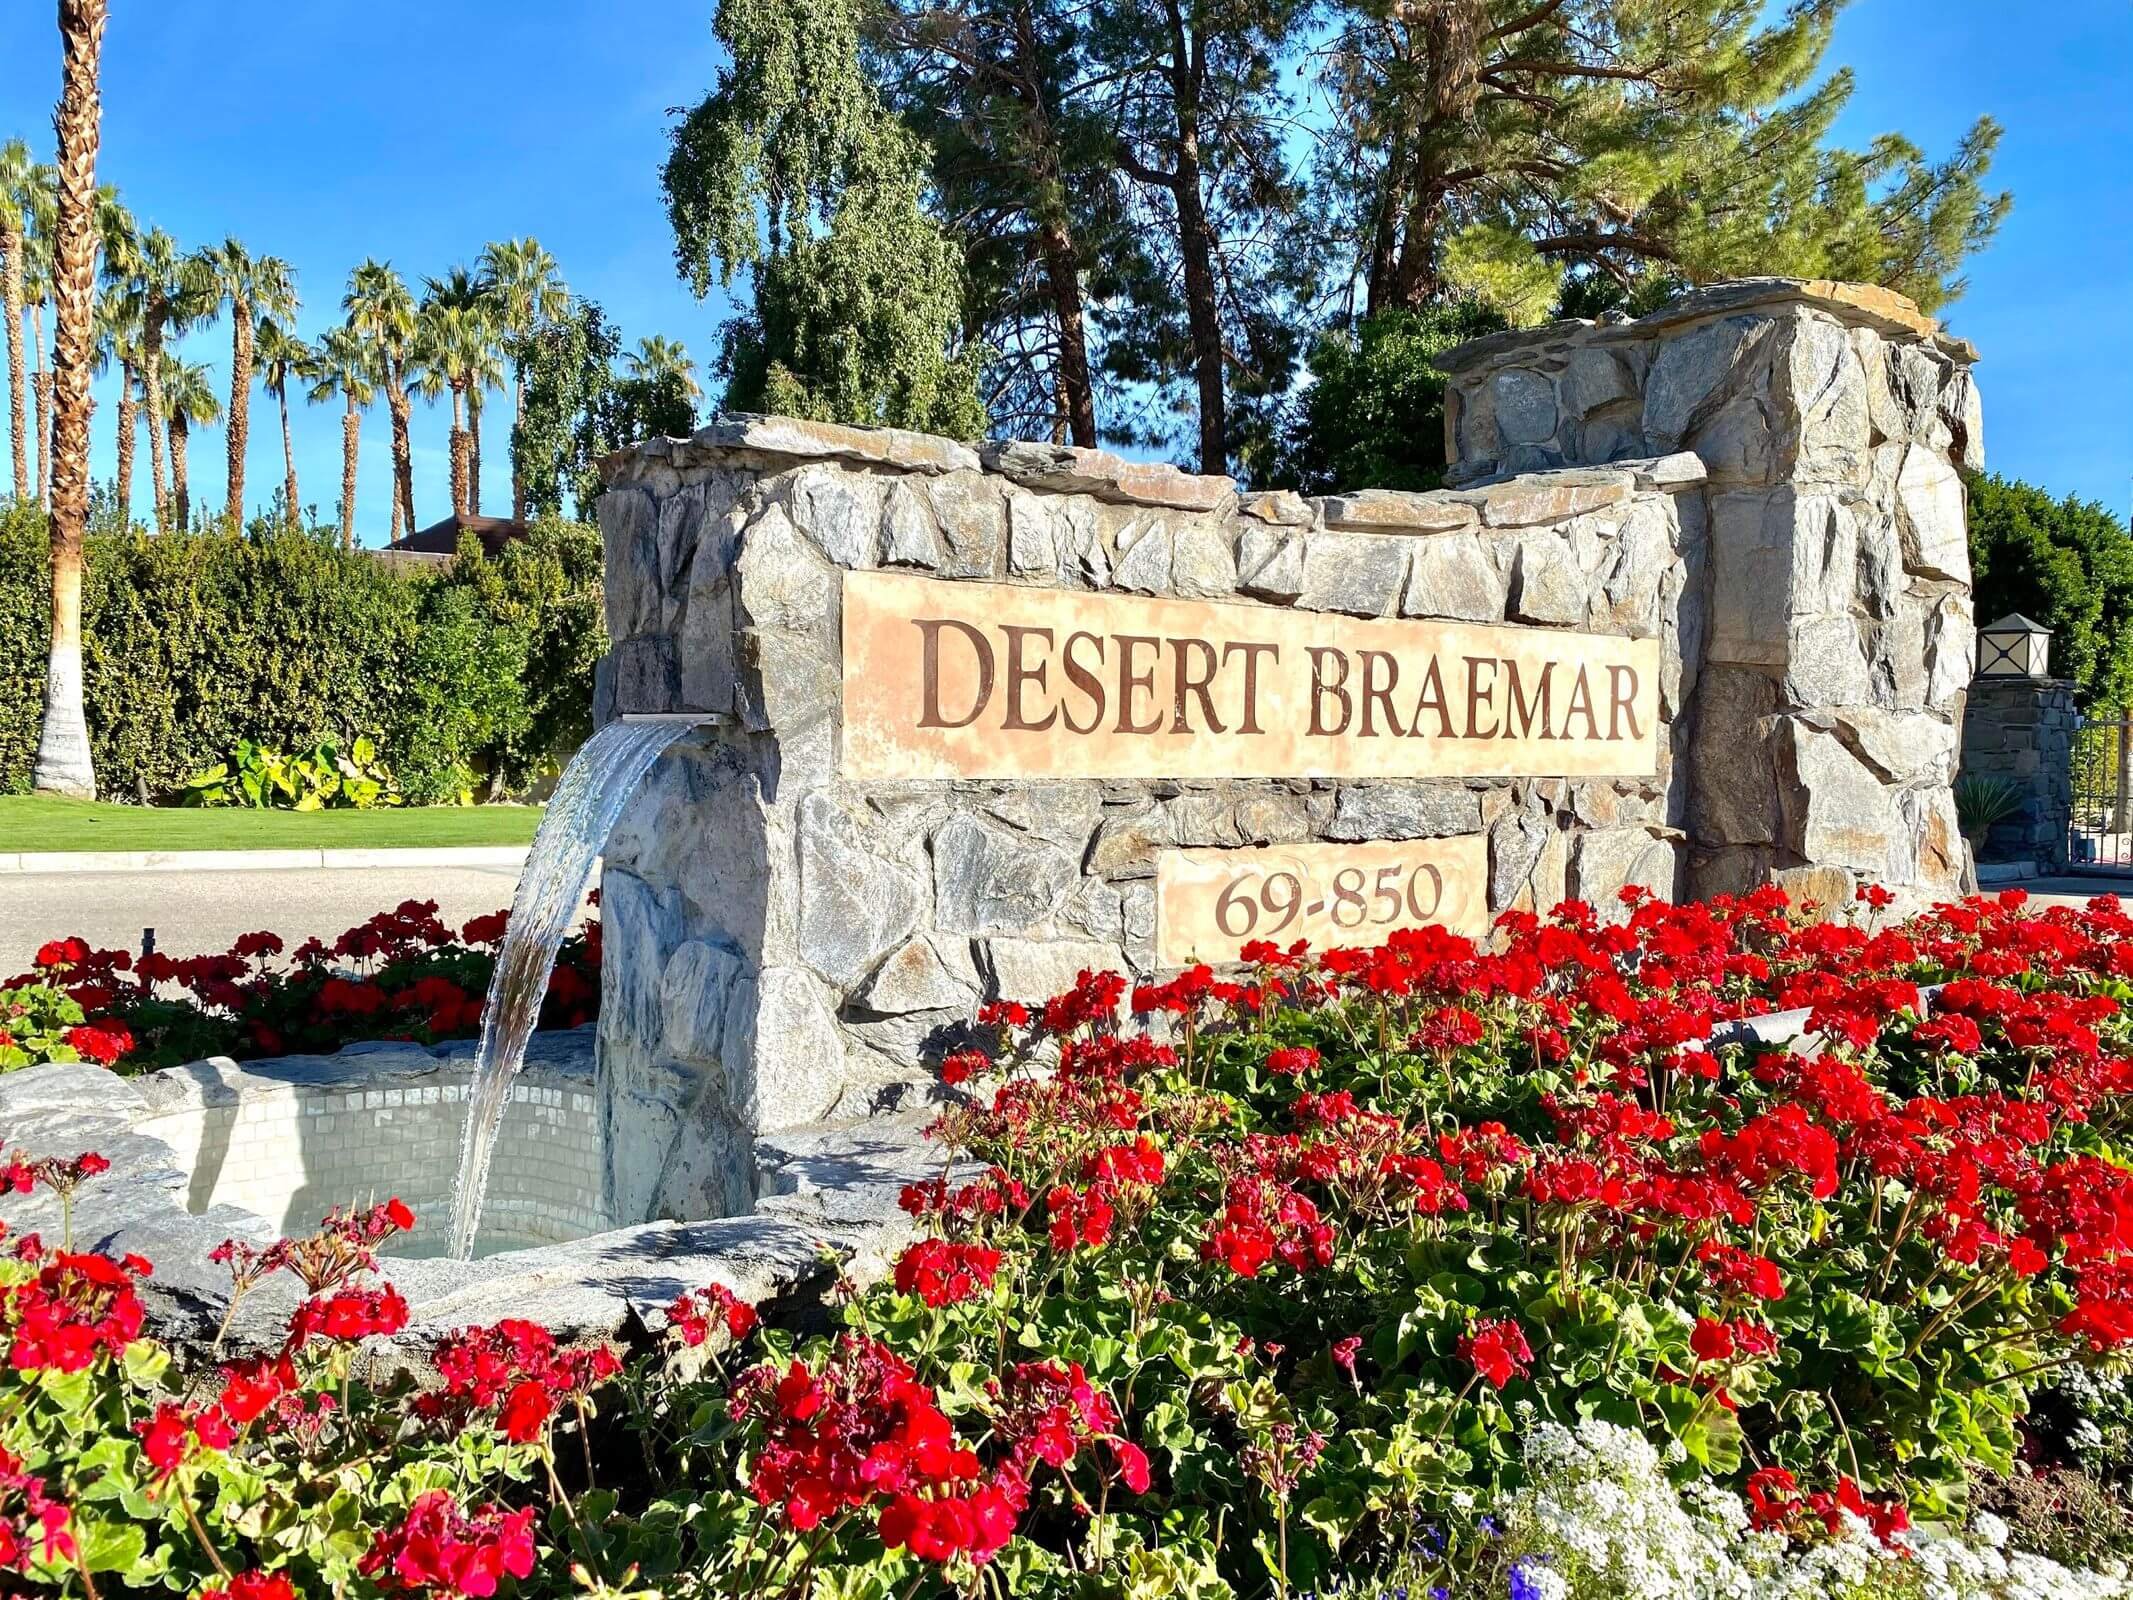 Desert Braemar Rancho Mirage 92270